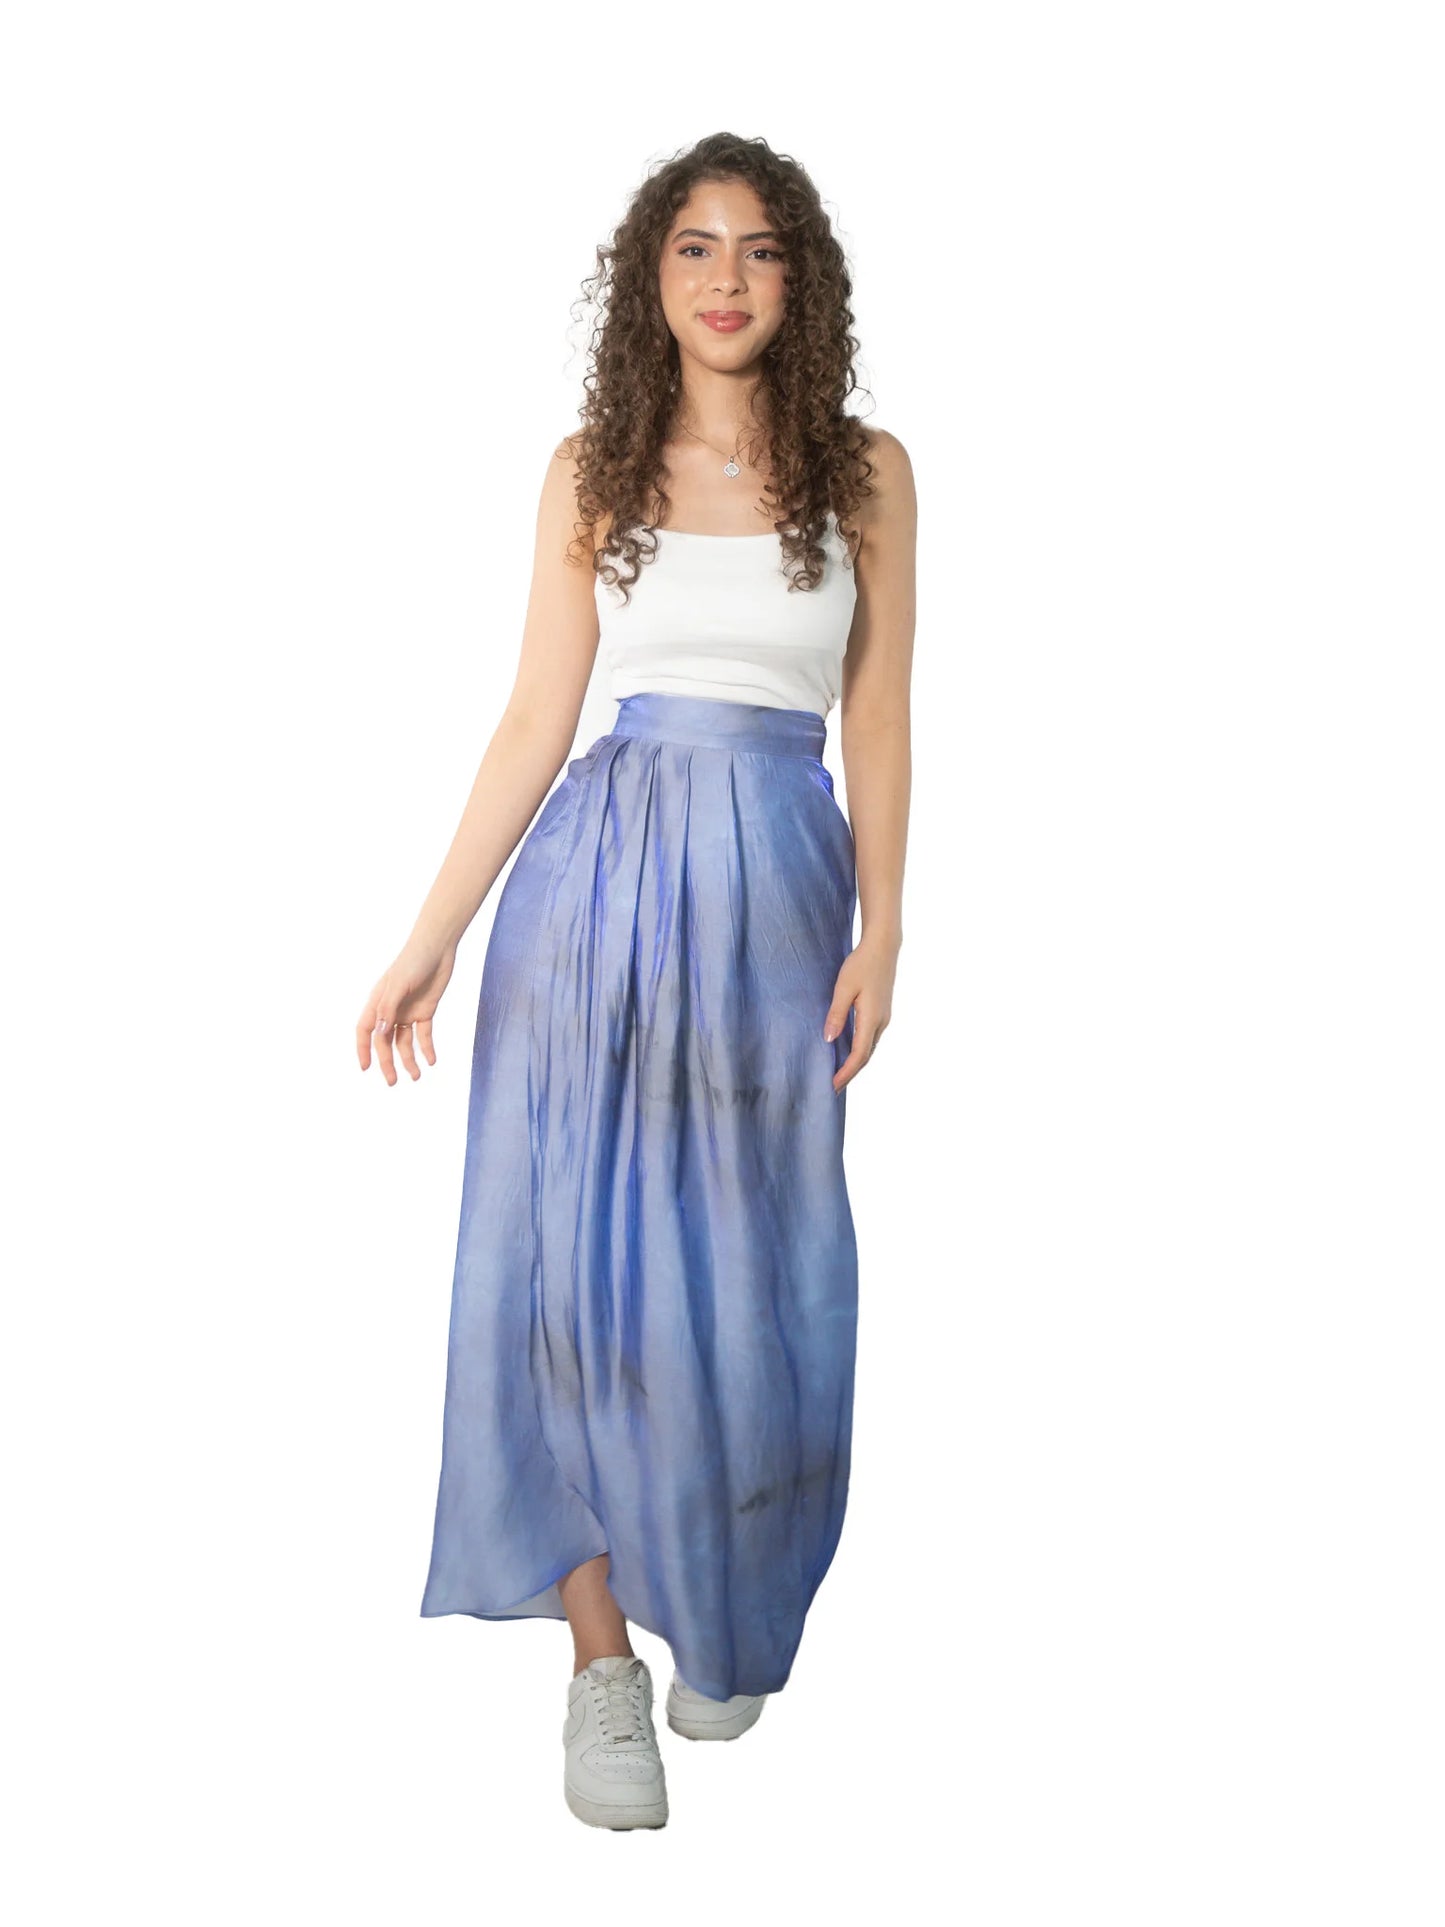 Blue wrap skirt